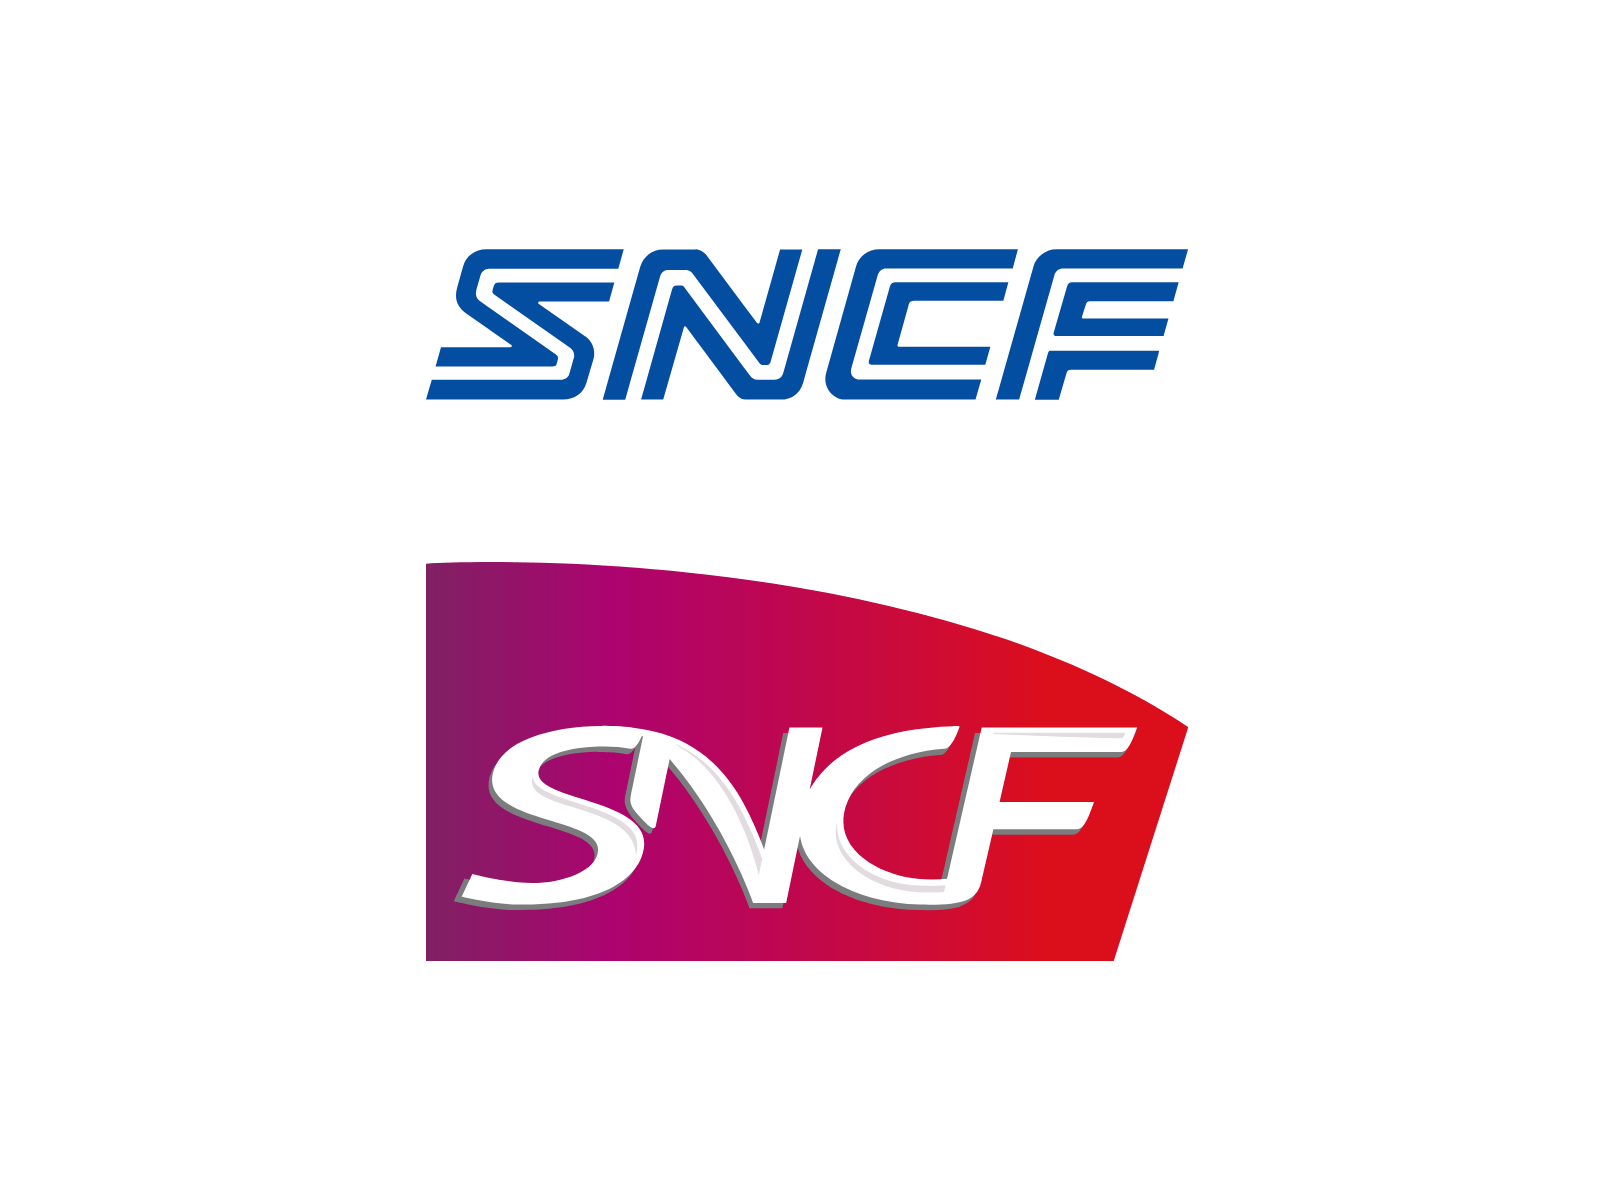 SNCF Logo - Corporate Identities of European railway companies